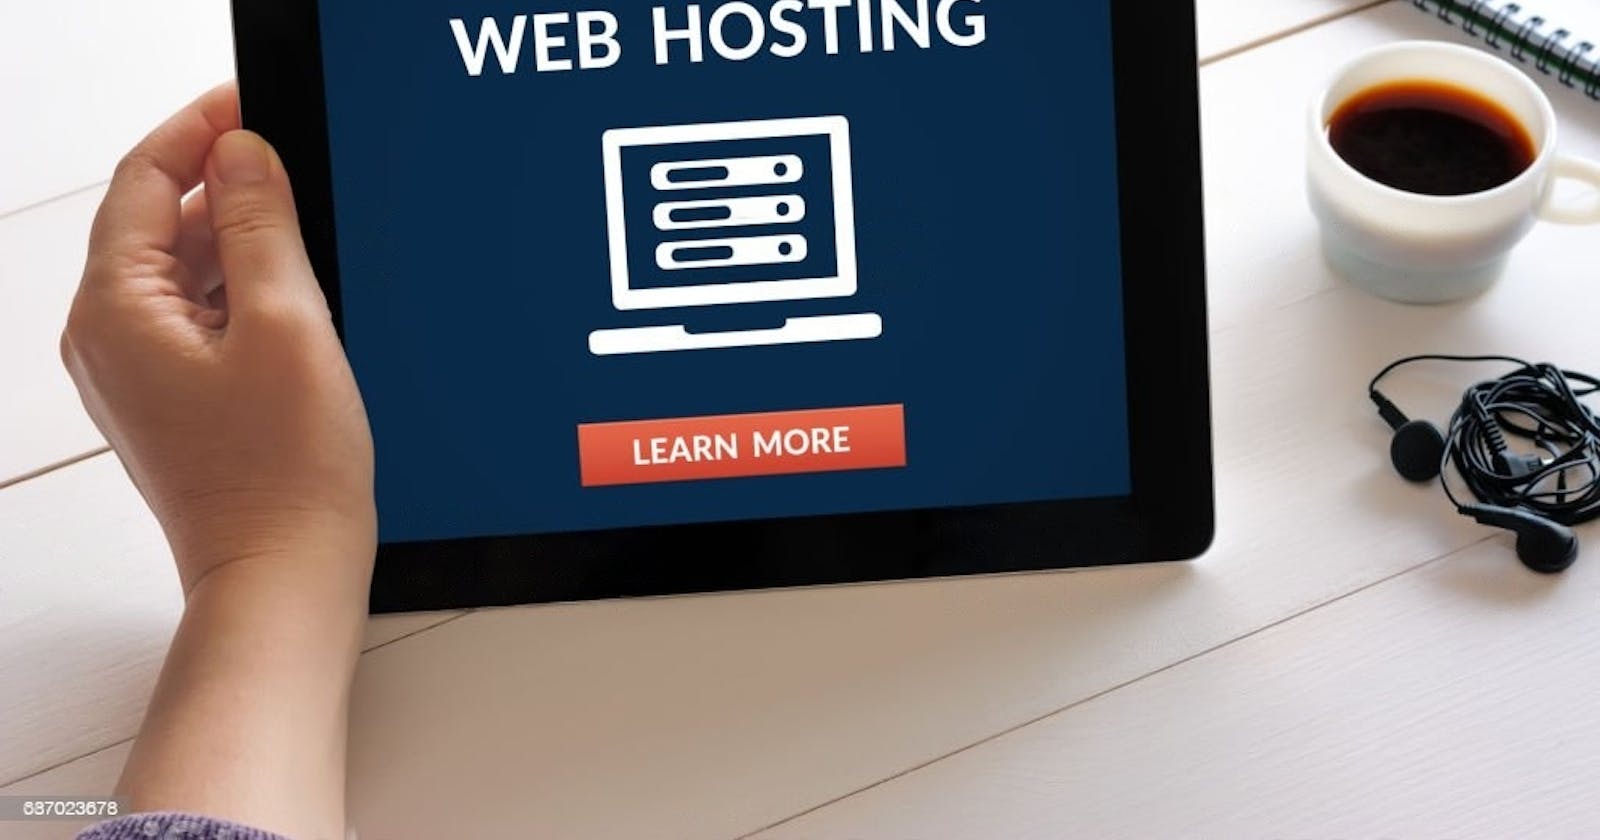 Hosting Your First Website